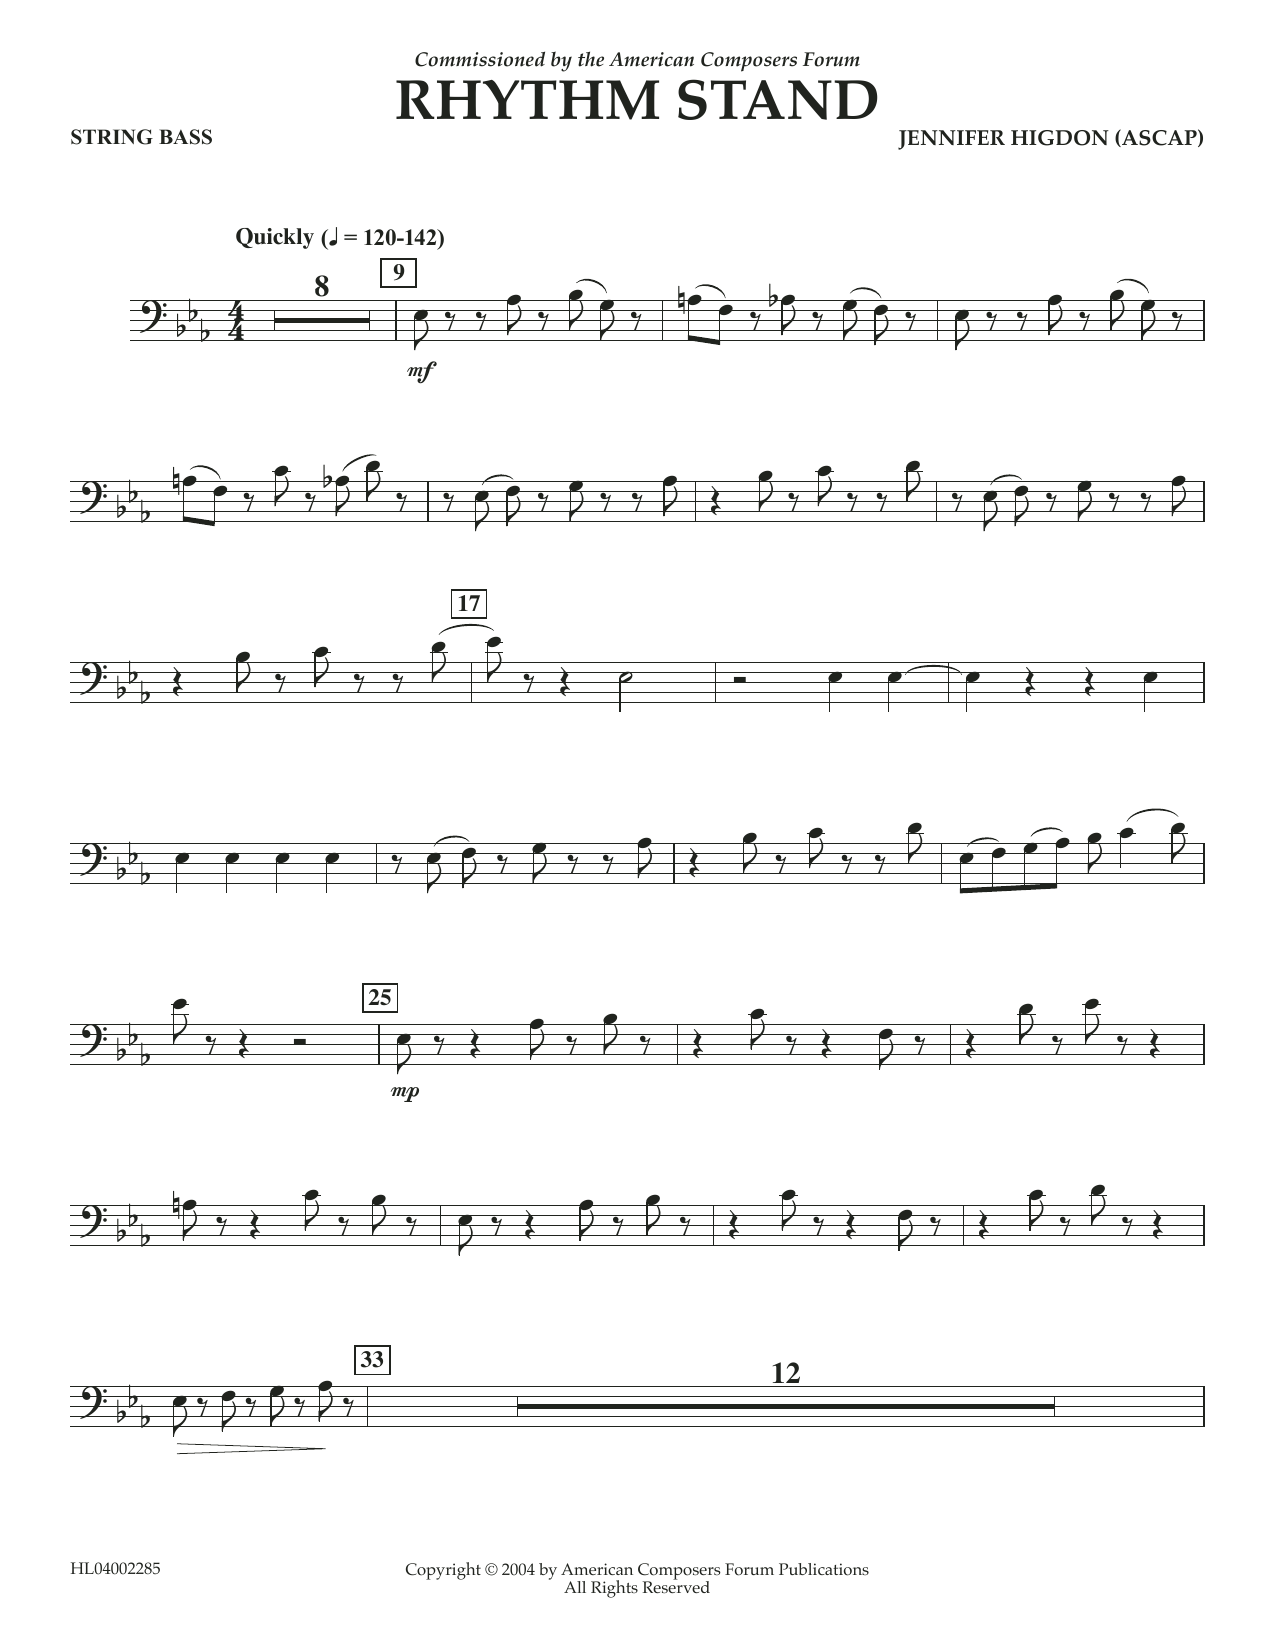 Jennifer Higdon Rhythm Stand - String Bass Sheet Music Notes & Chords for Concert Band - Download or Print PDF